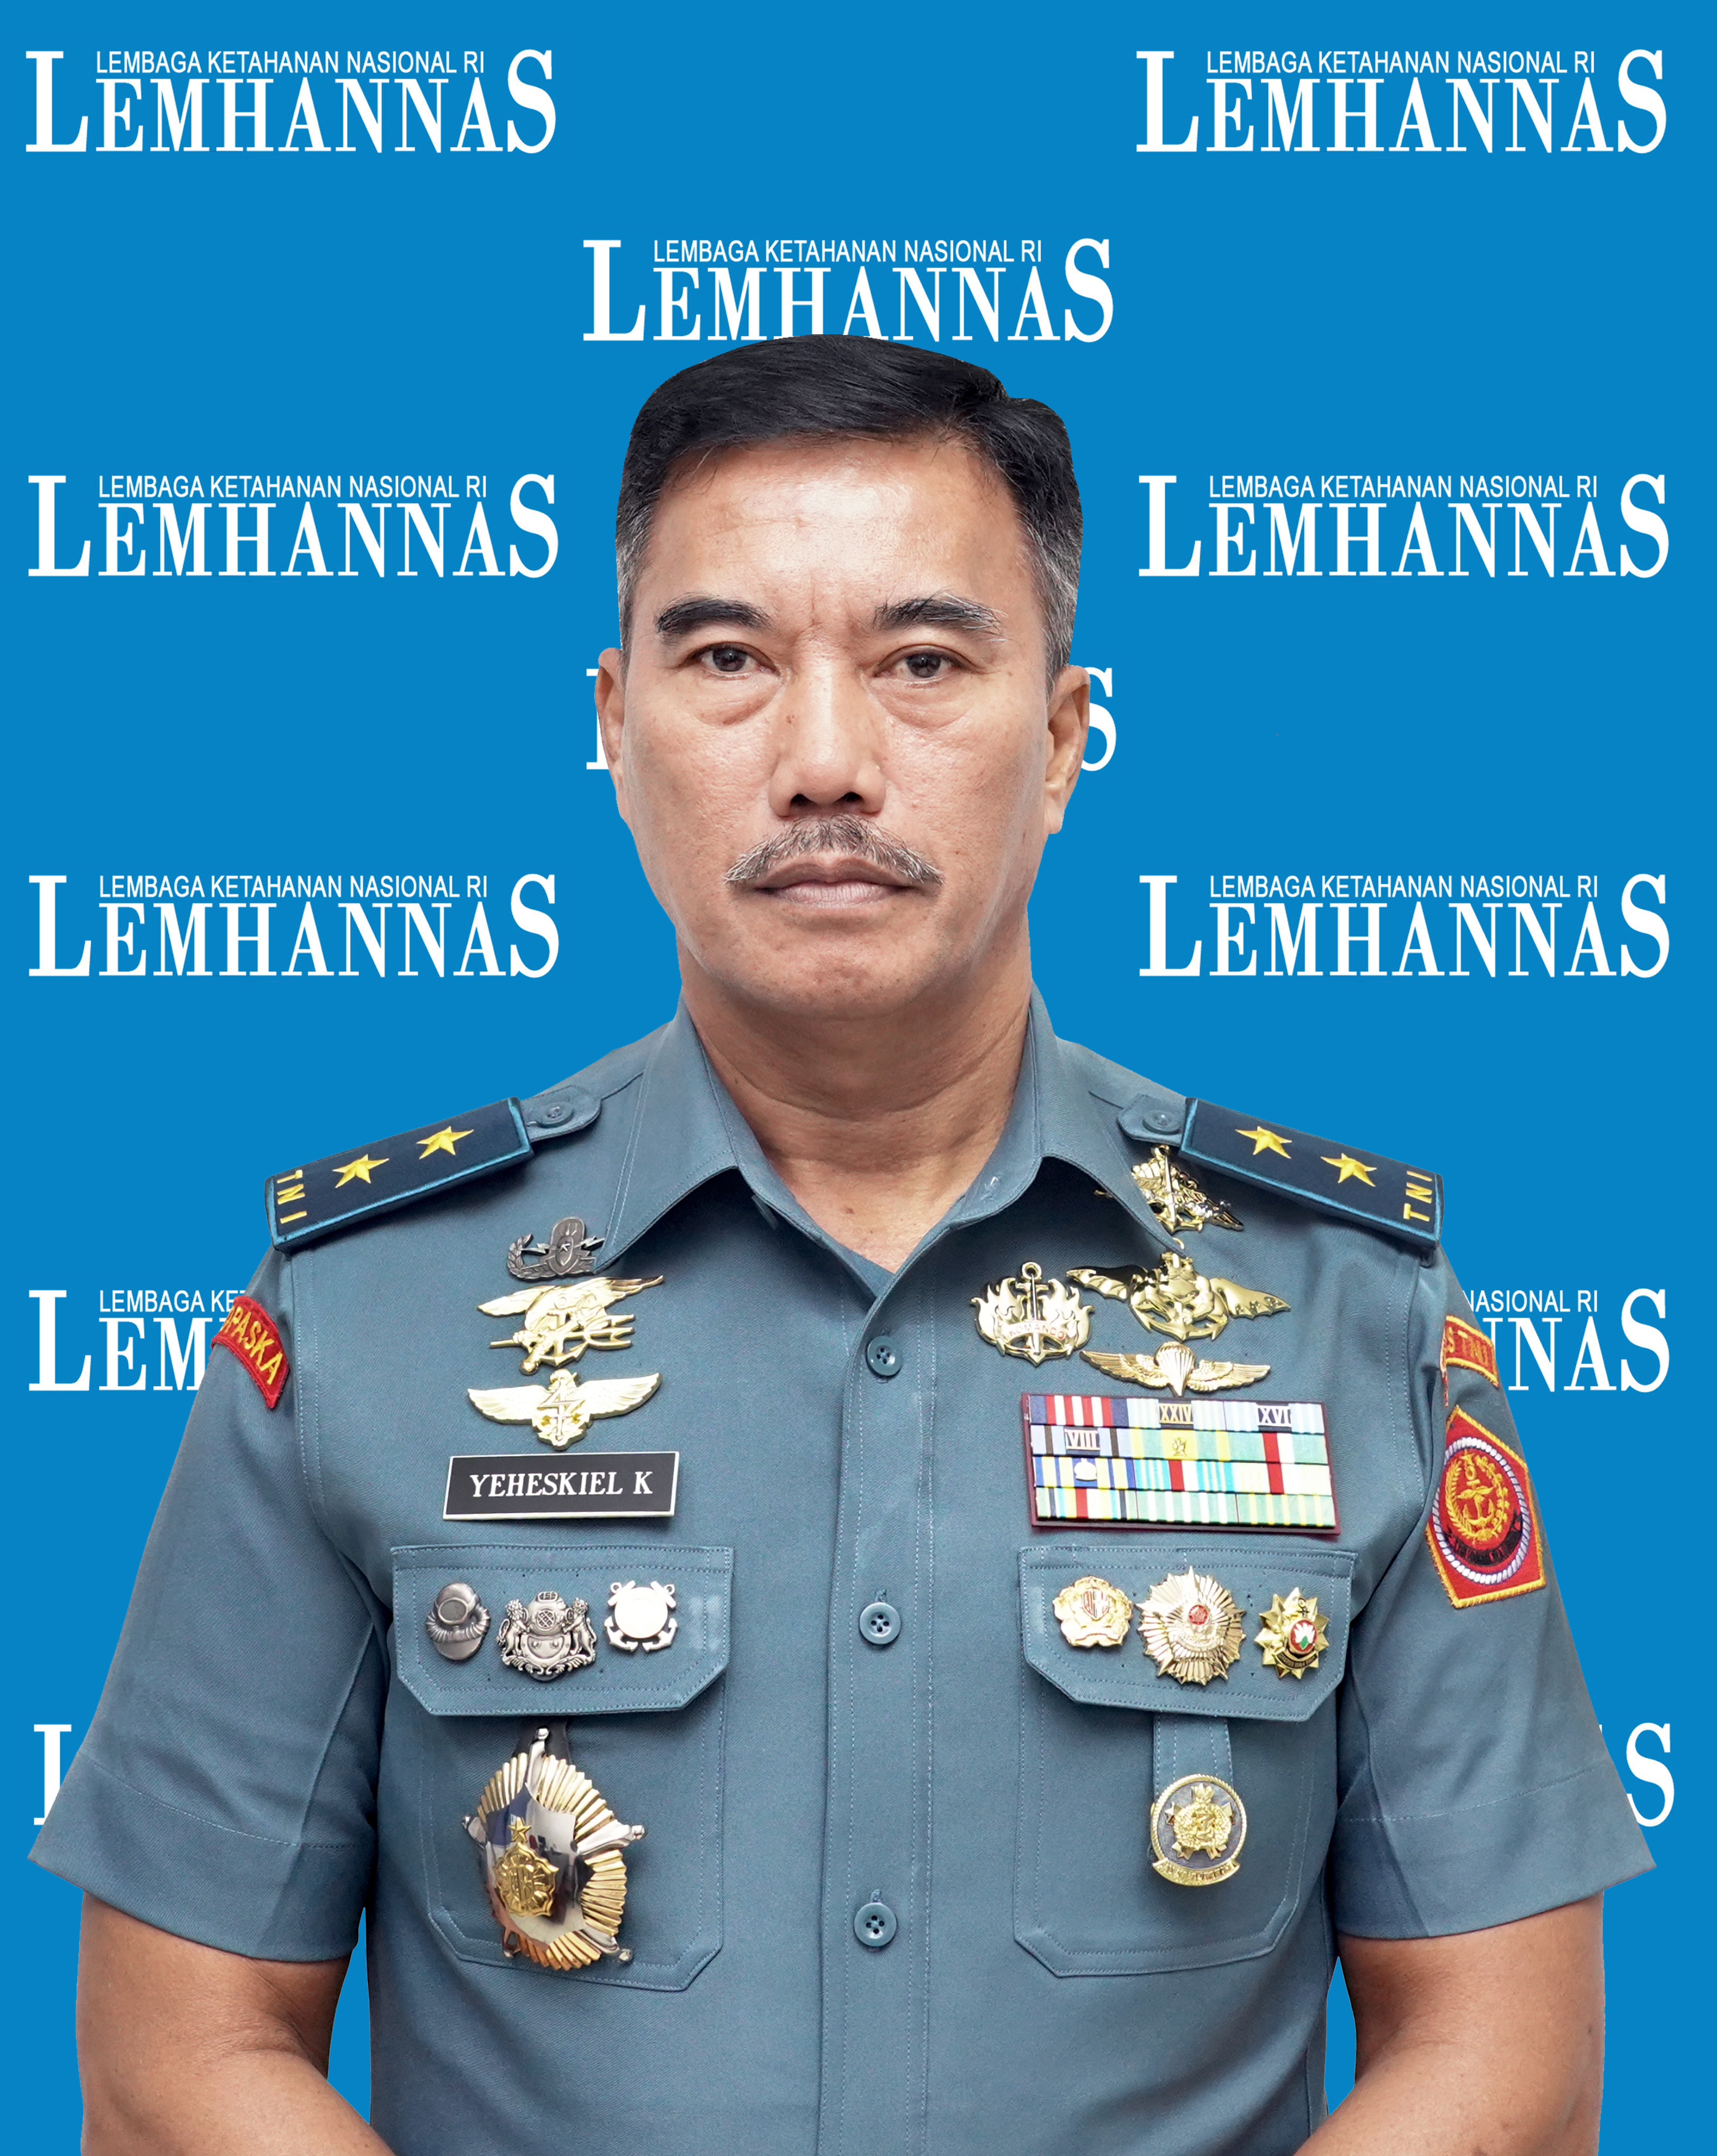 Laksda TNI Yeheskiel Katiandagho, S.E., M.M., M.H.